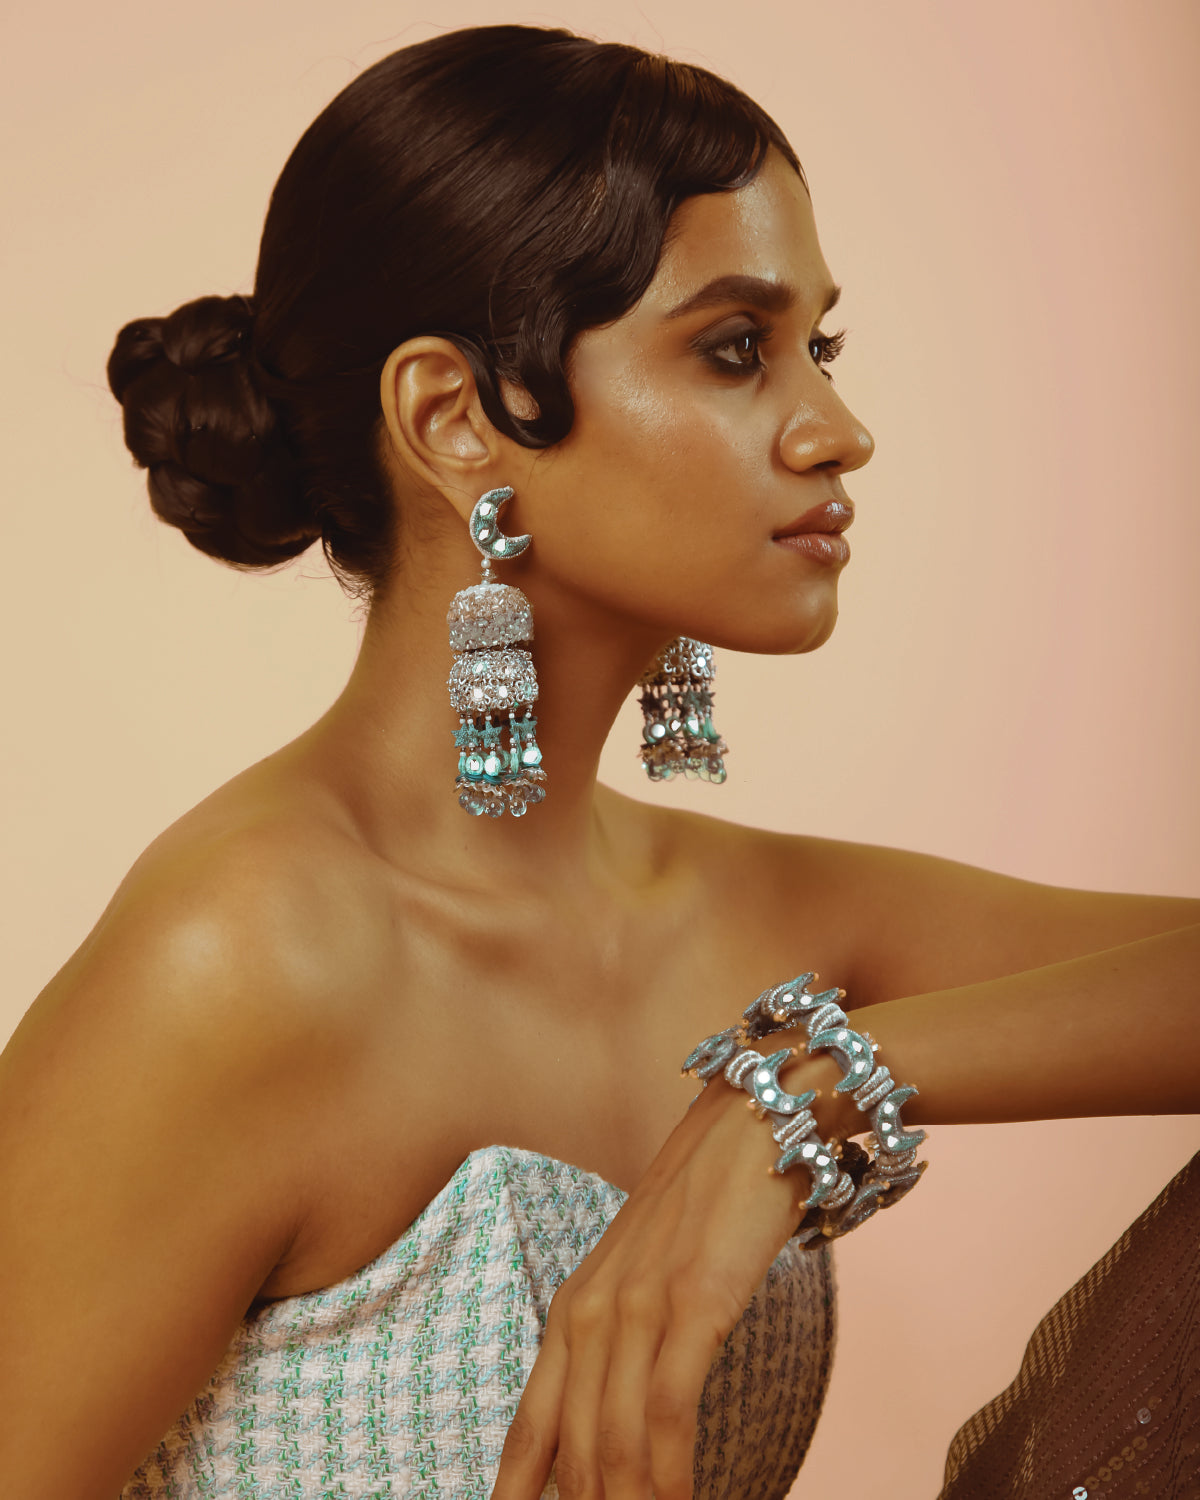 What Jhumka? Earrings